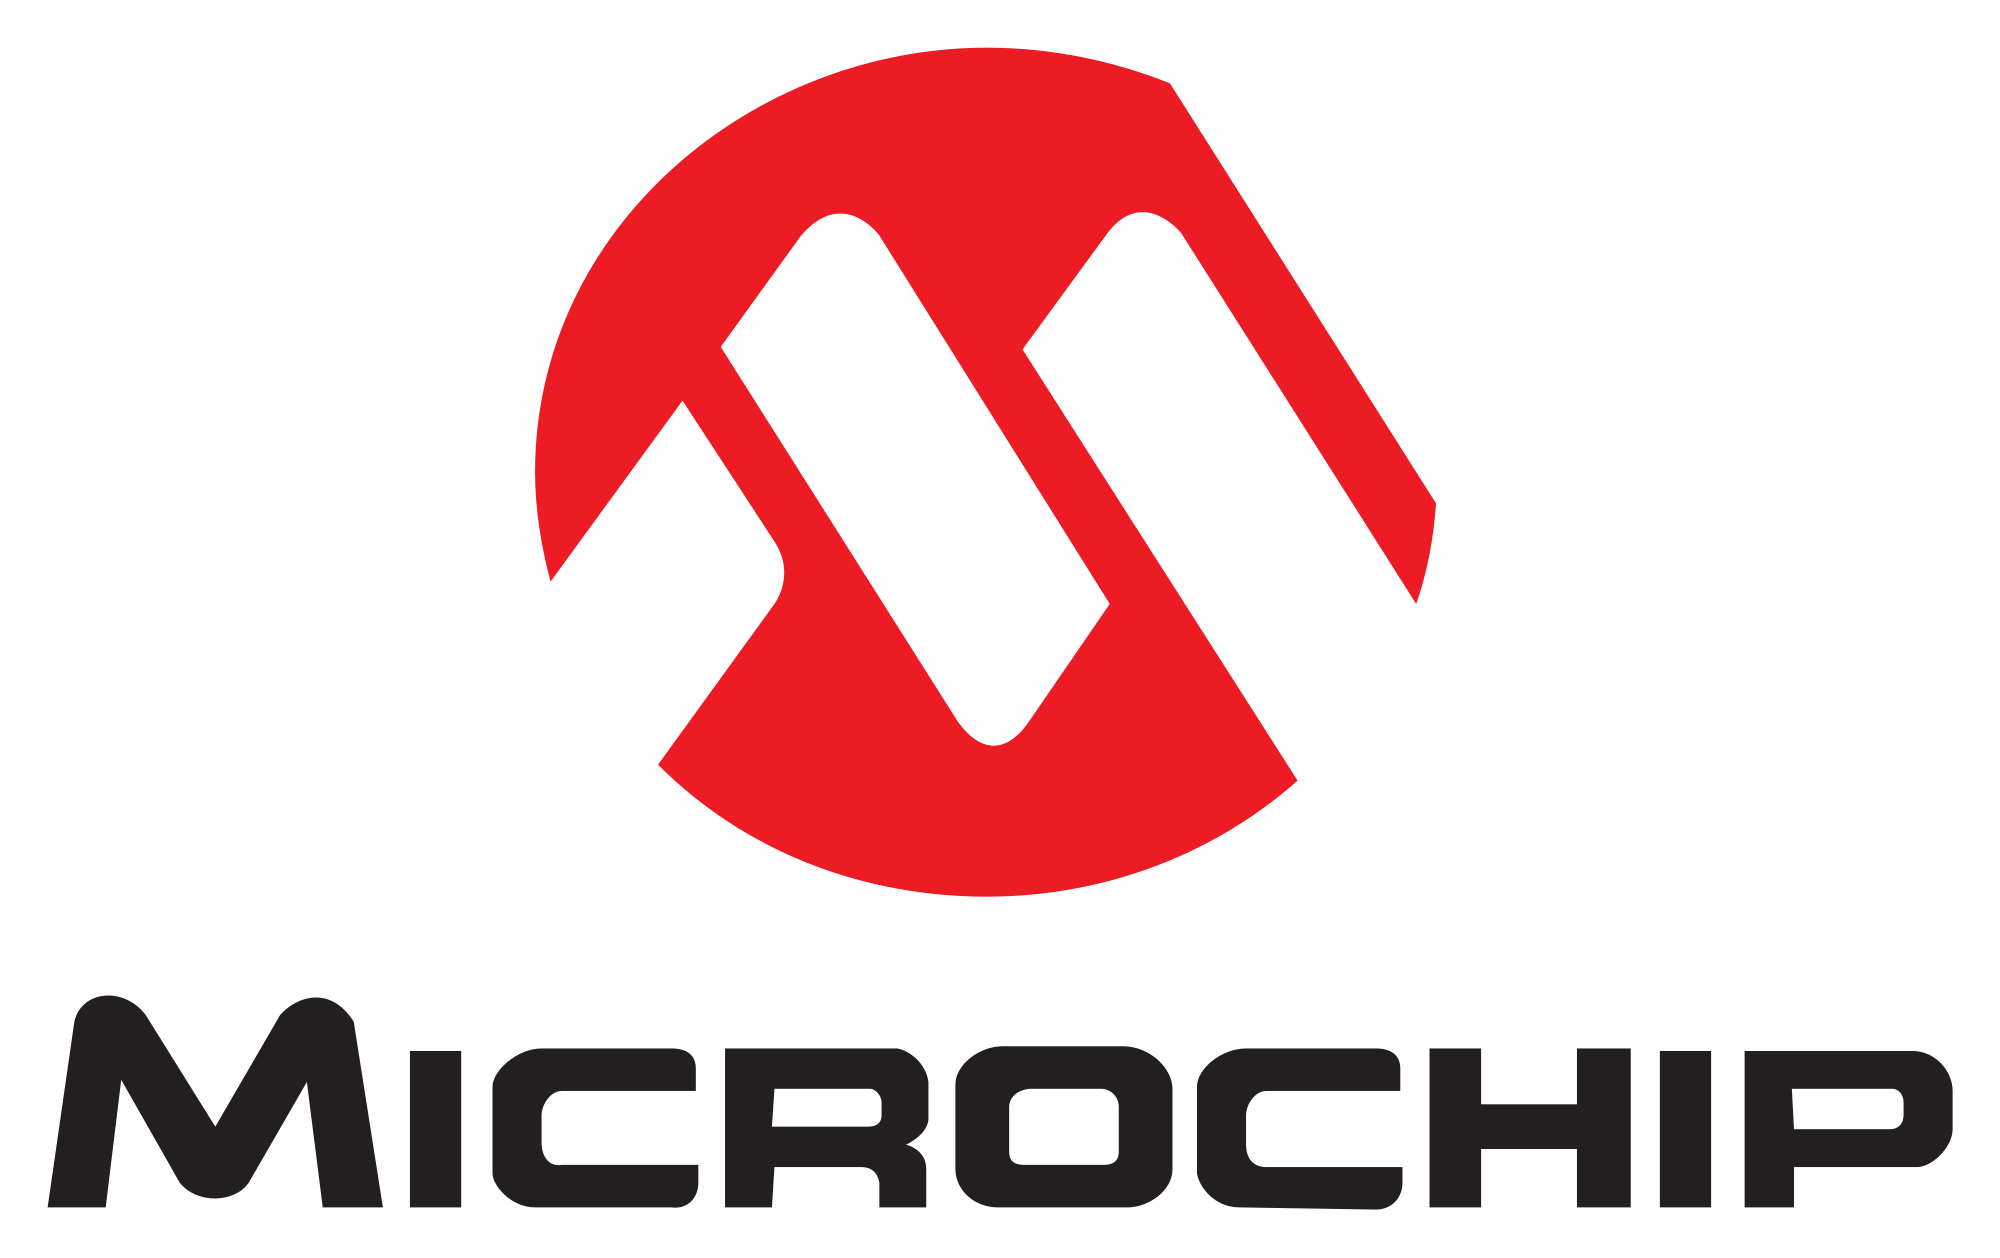 Microchip logo